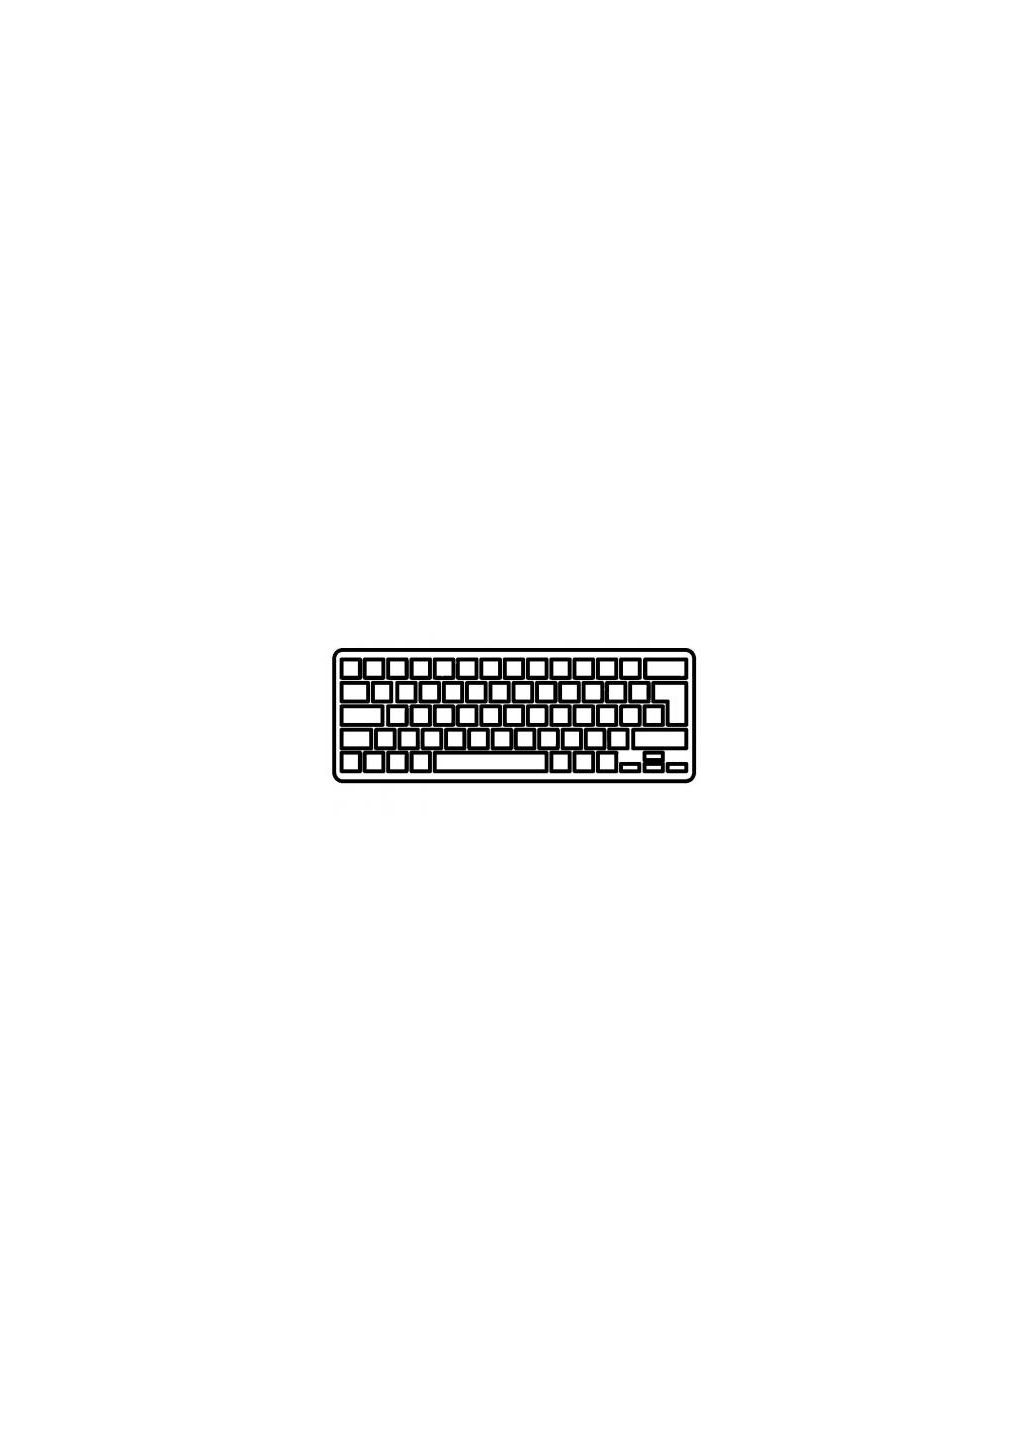 Клавиатура для ноутбука (A43706) Toshiba satellite a200/a300/m200/m300 series белая ua (276706375)